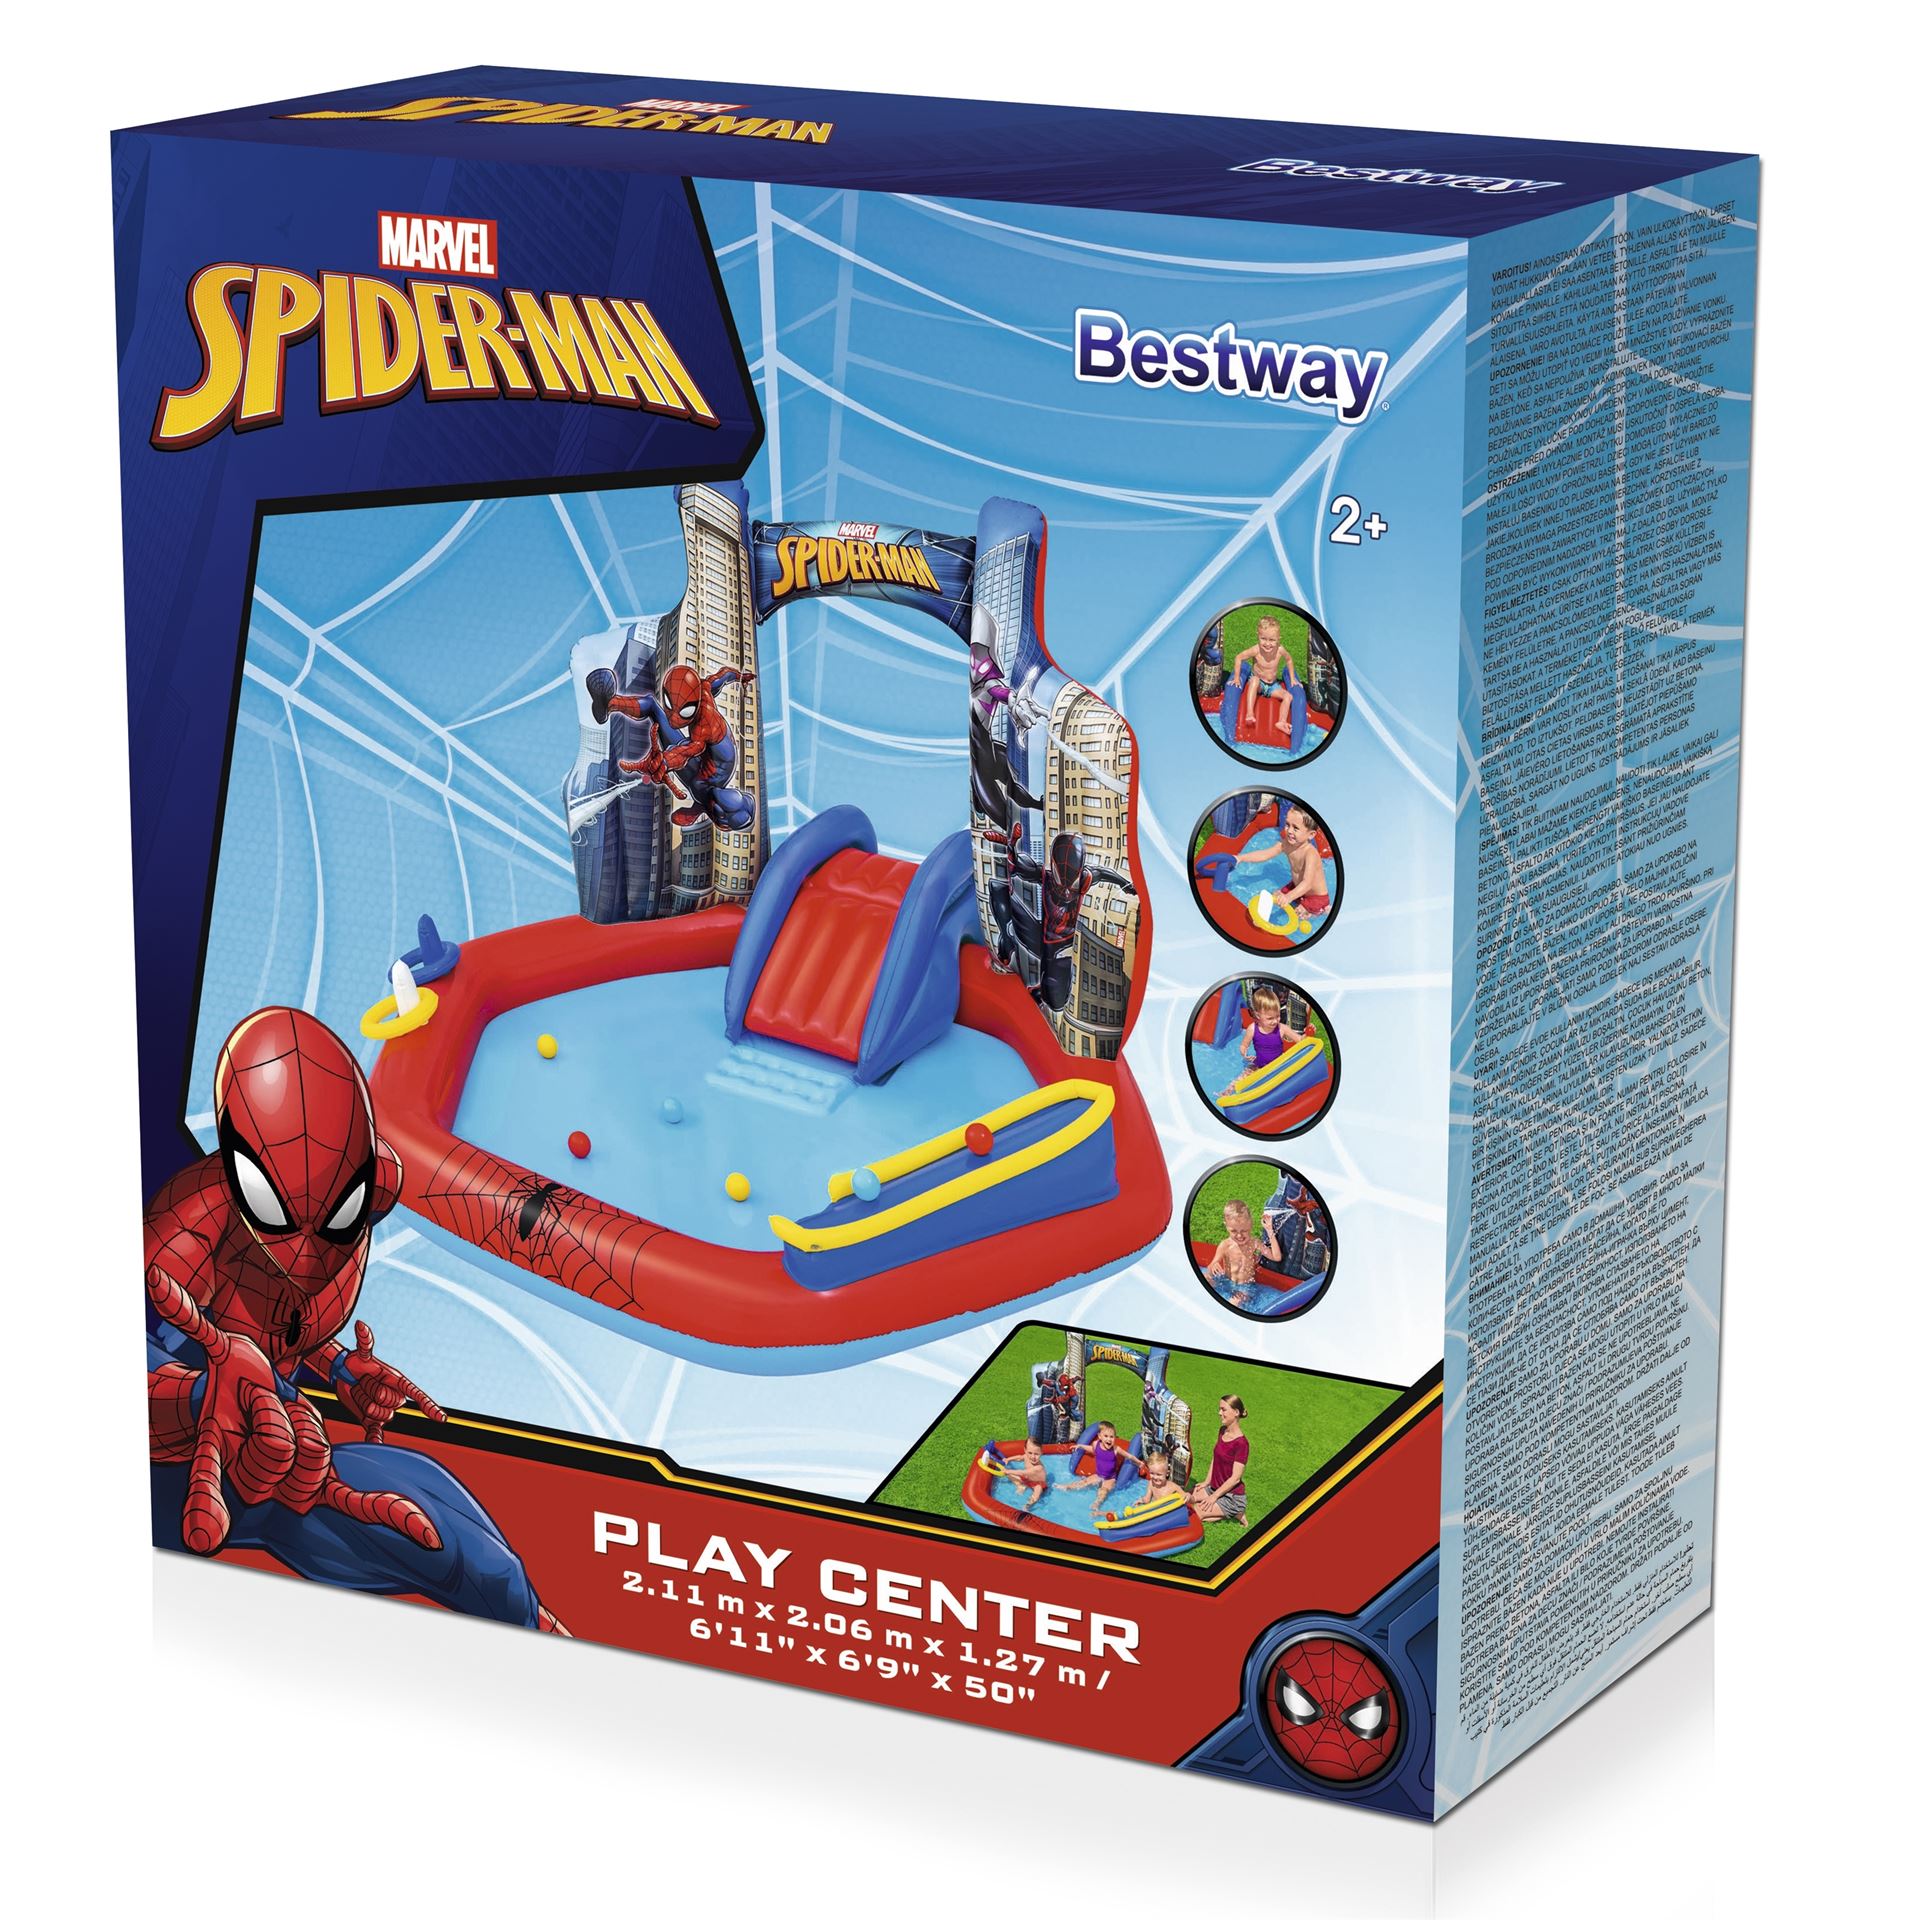 Spiderman-opblaasbaar-kinderzwembad-ballenbad-211x206x127cm-playcenter